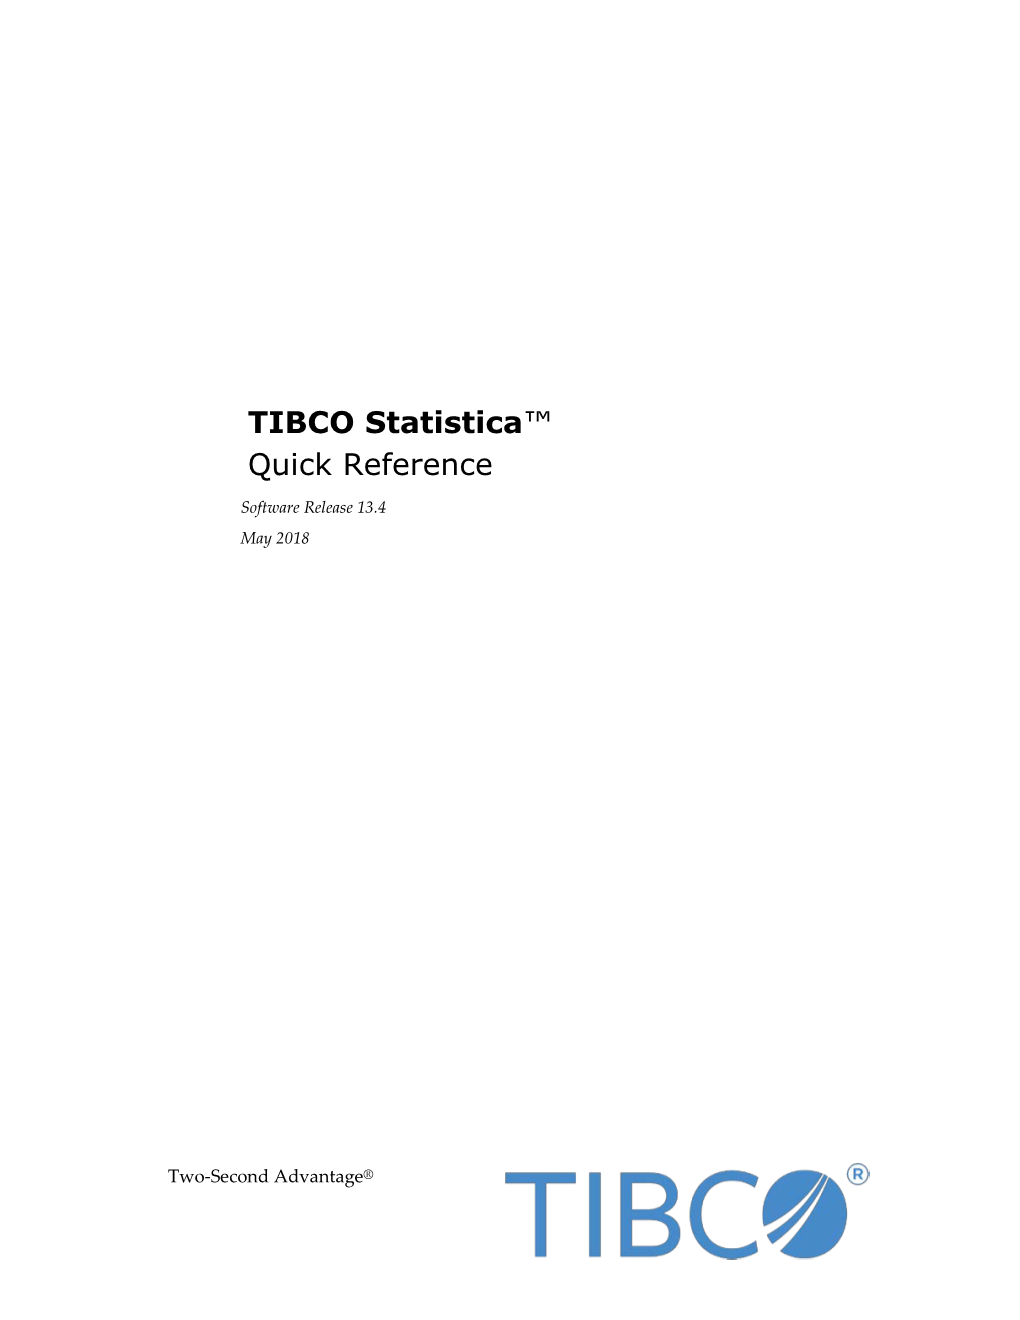 TIBCO Statistica™ Quick Reference